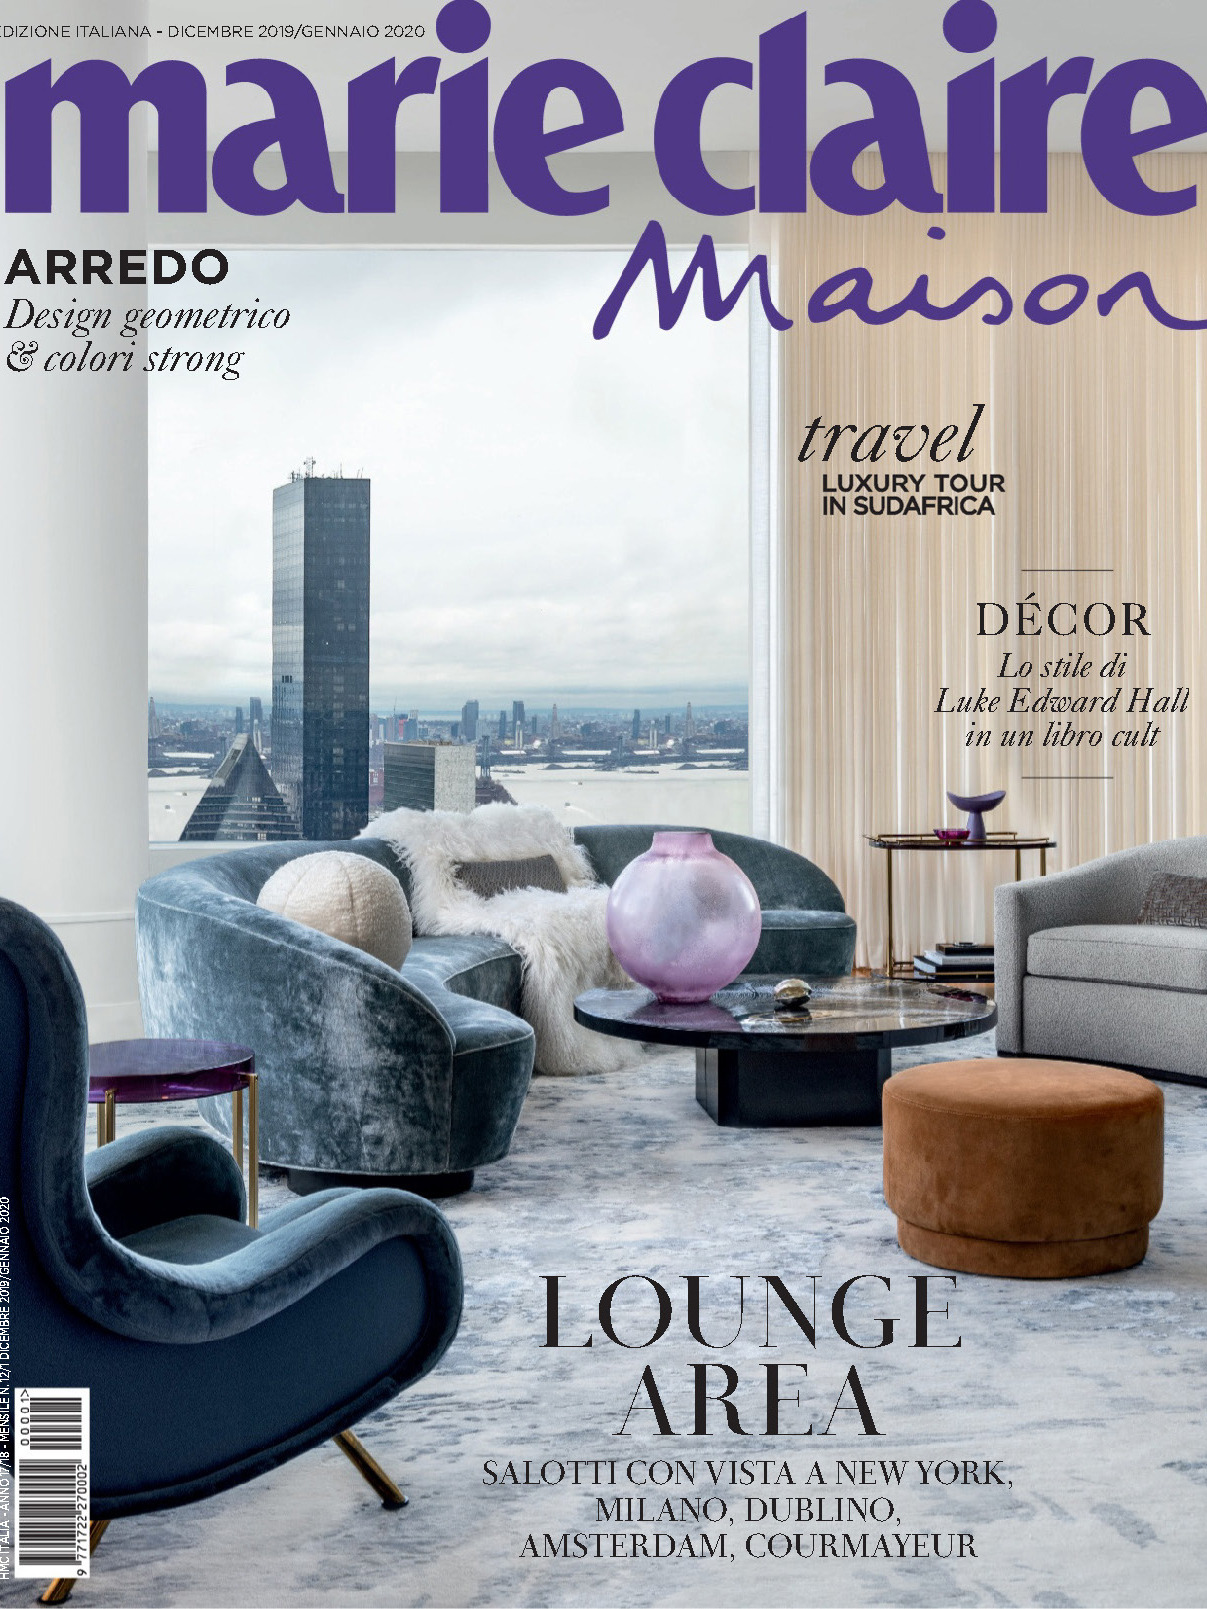 《Marie Claire maison》意大利版时尚室内设计杂志2019年12年-2020年01月号